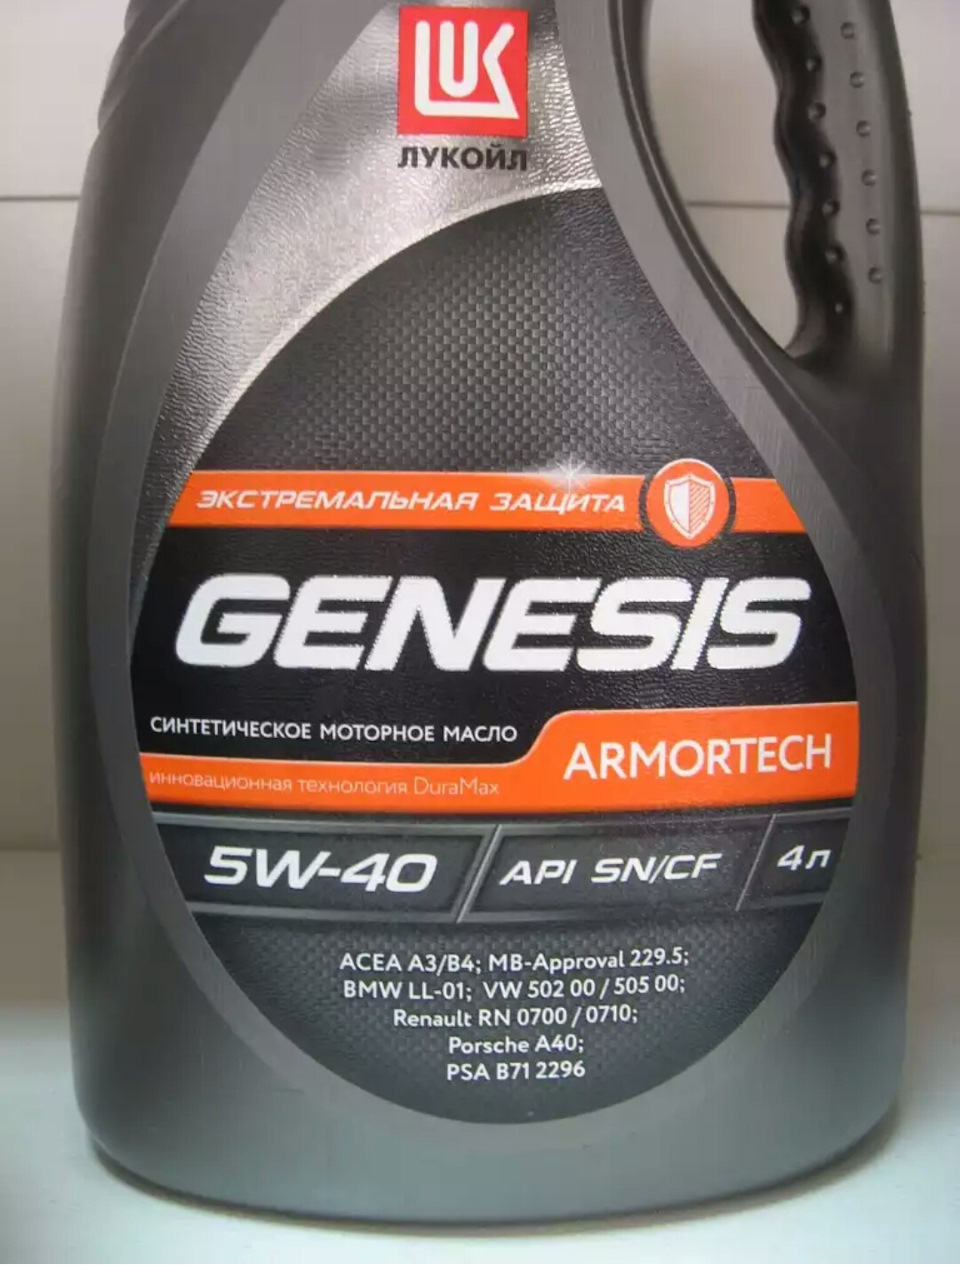 Масло генезис 5в40. 5w-40 Genesis Armortech 4л. Genesis Armortech 5w40 SN/CF. Масло Лукойл 5w40 Genesis Armortech. Lukoil Genesis Armortech 5w-40 4л.